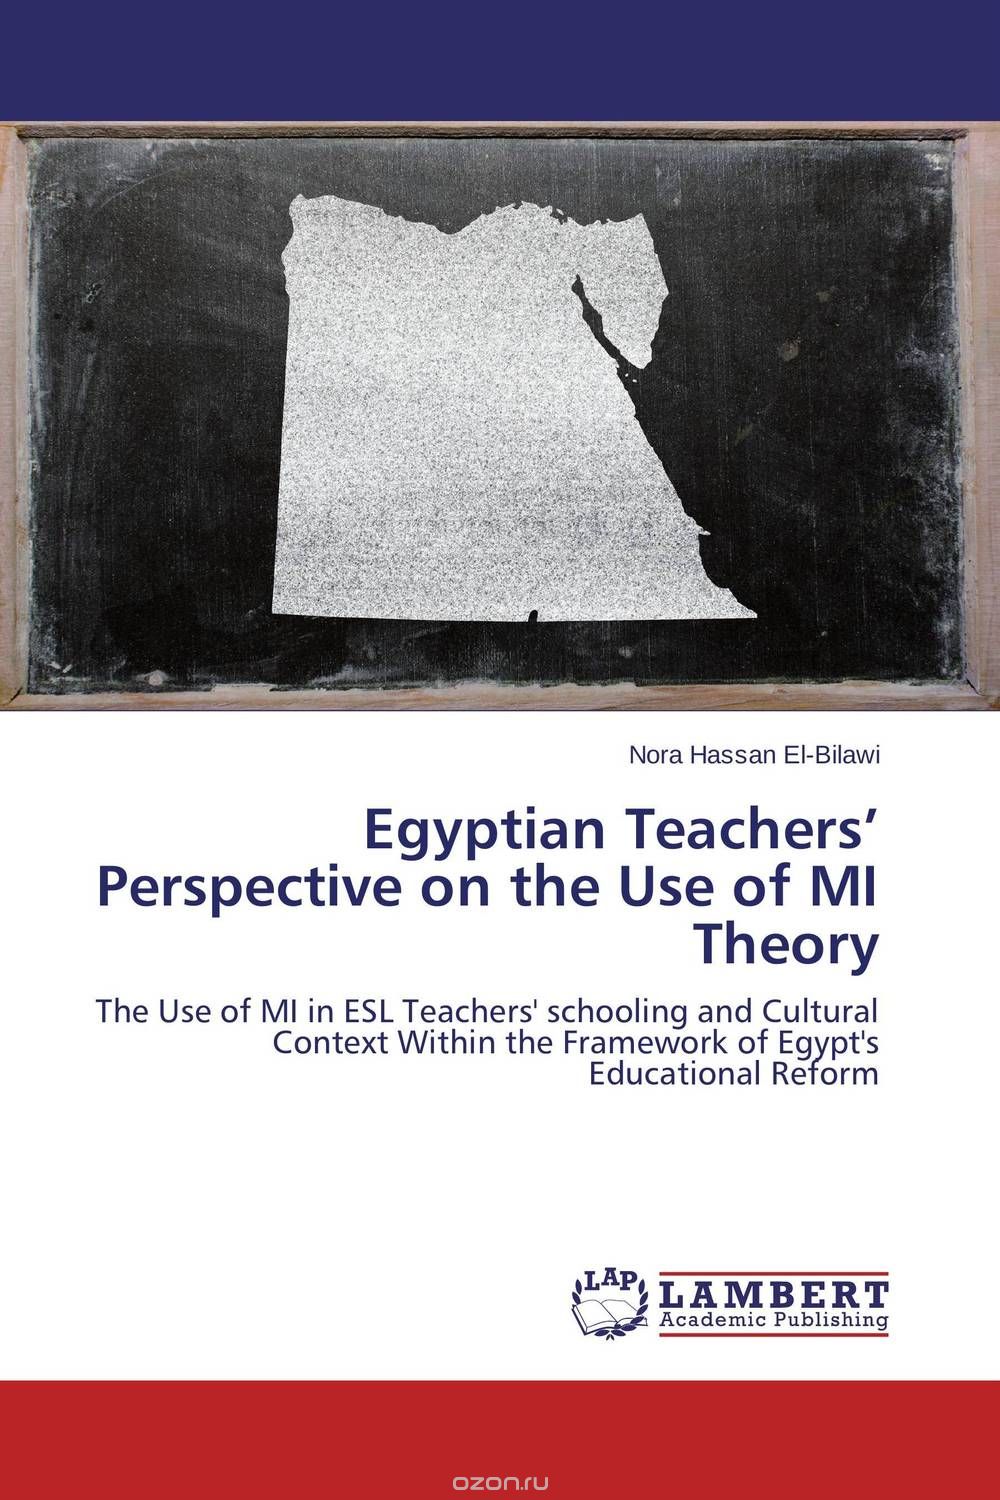 Скачать книгу "Egyptian Teachers’ Perspective on the Use of MI Theory"